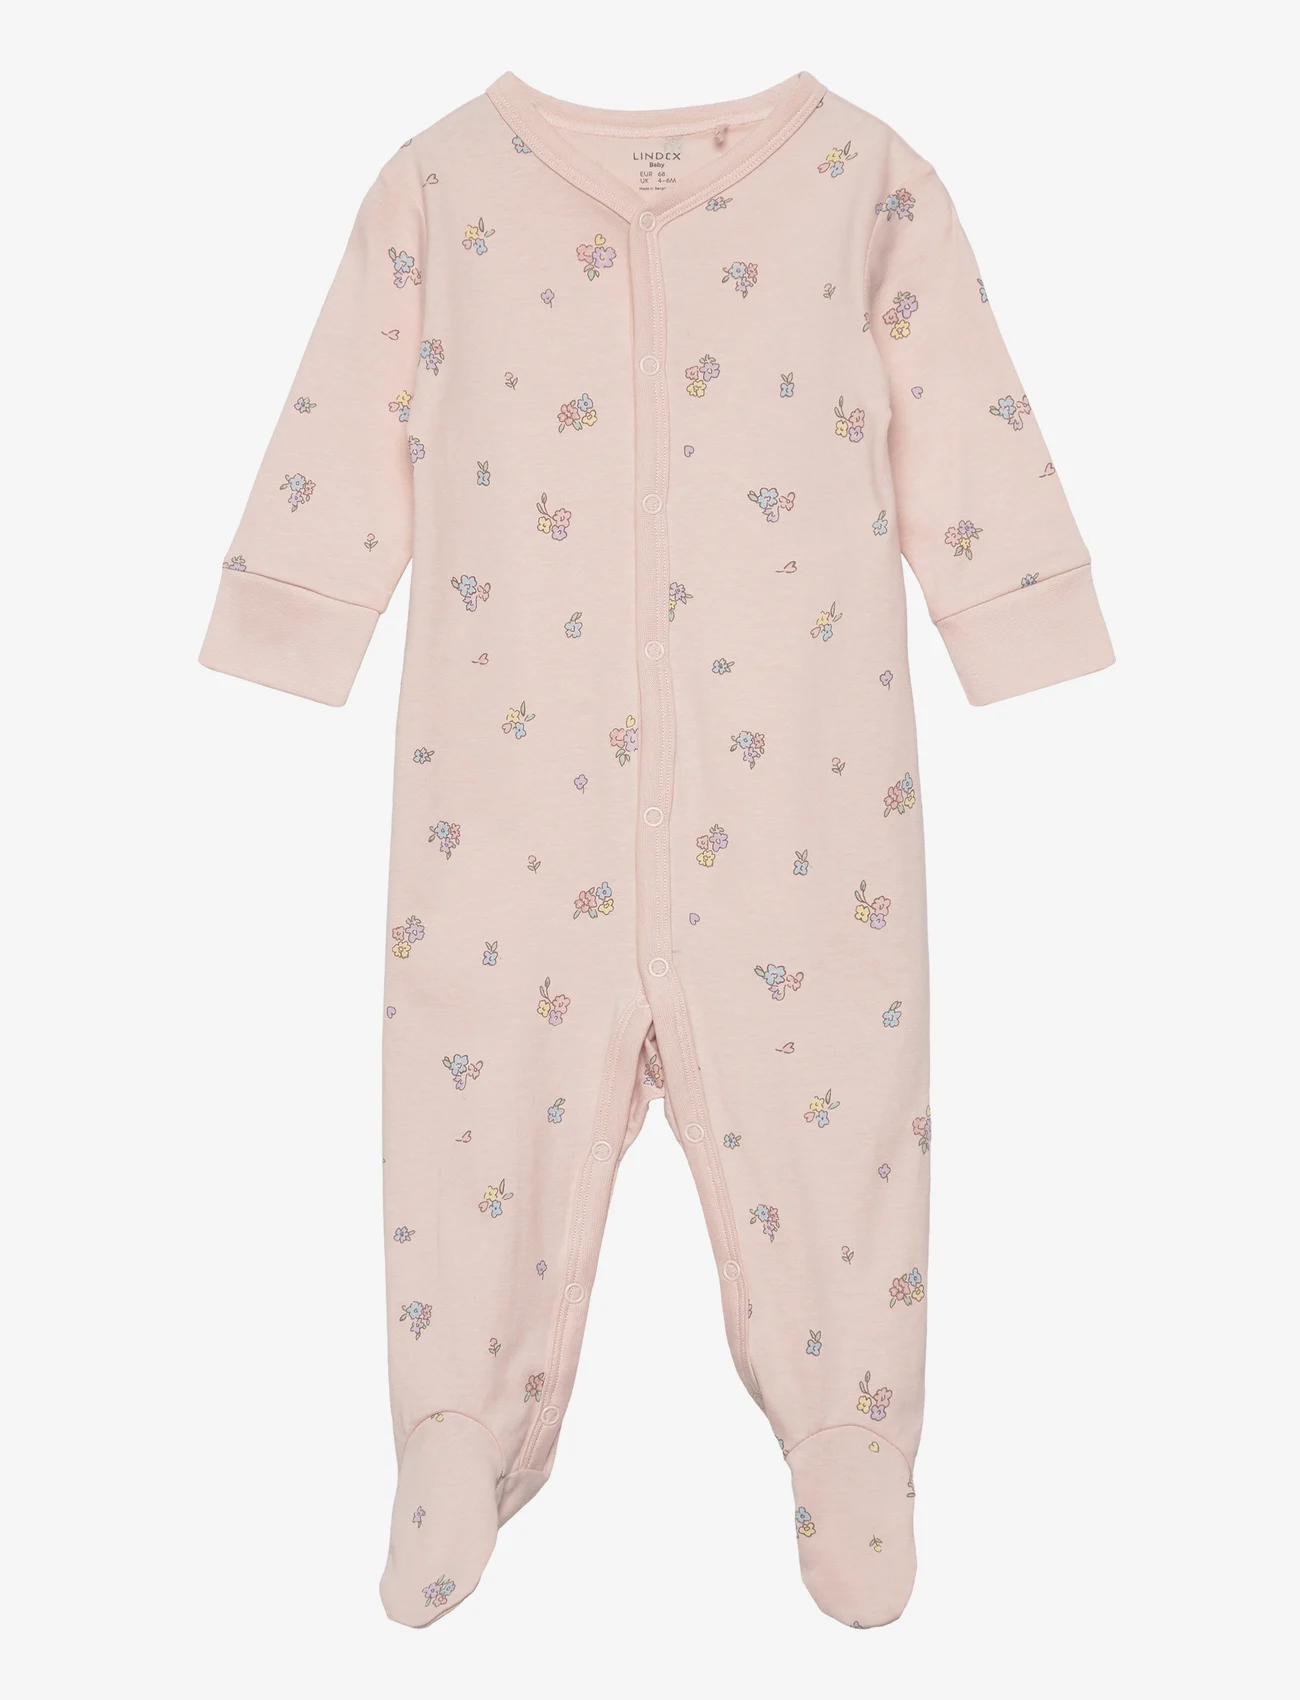 Lindex - Pyjamas w foot - sleeping overalls - light pink - 0